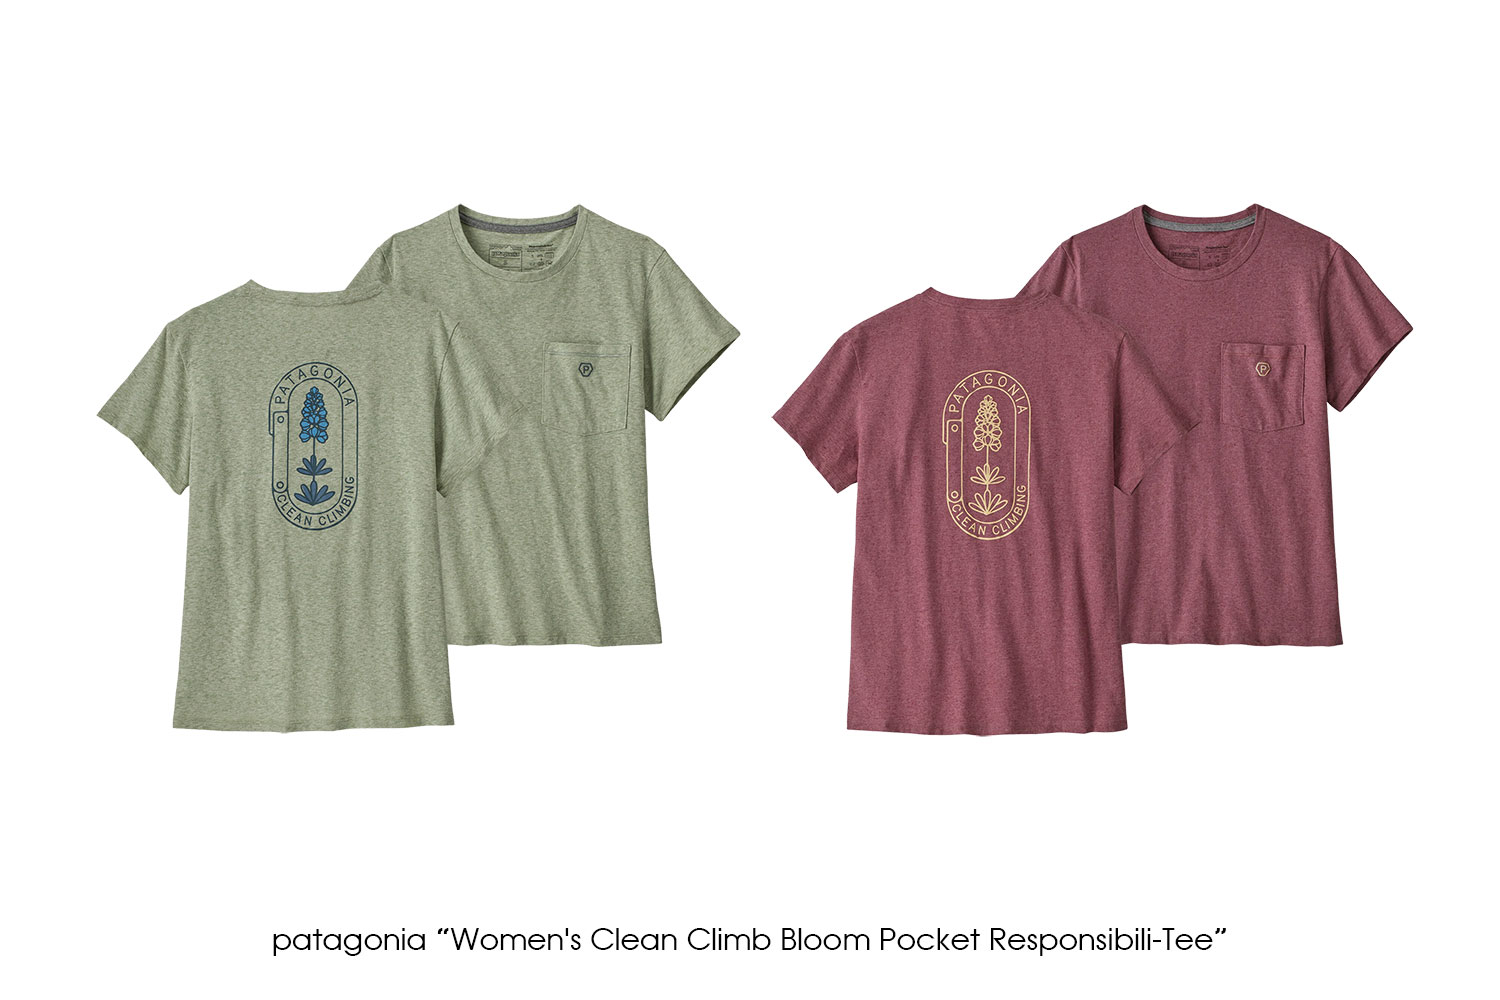 patagonia "Women's Clean Climb Bloom Pocket Responsibili-Tee"